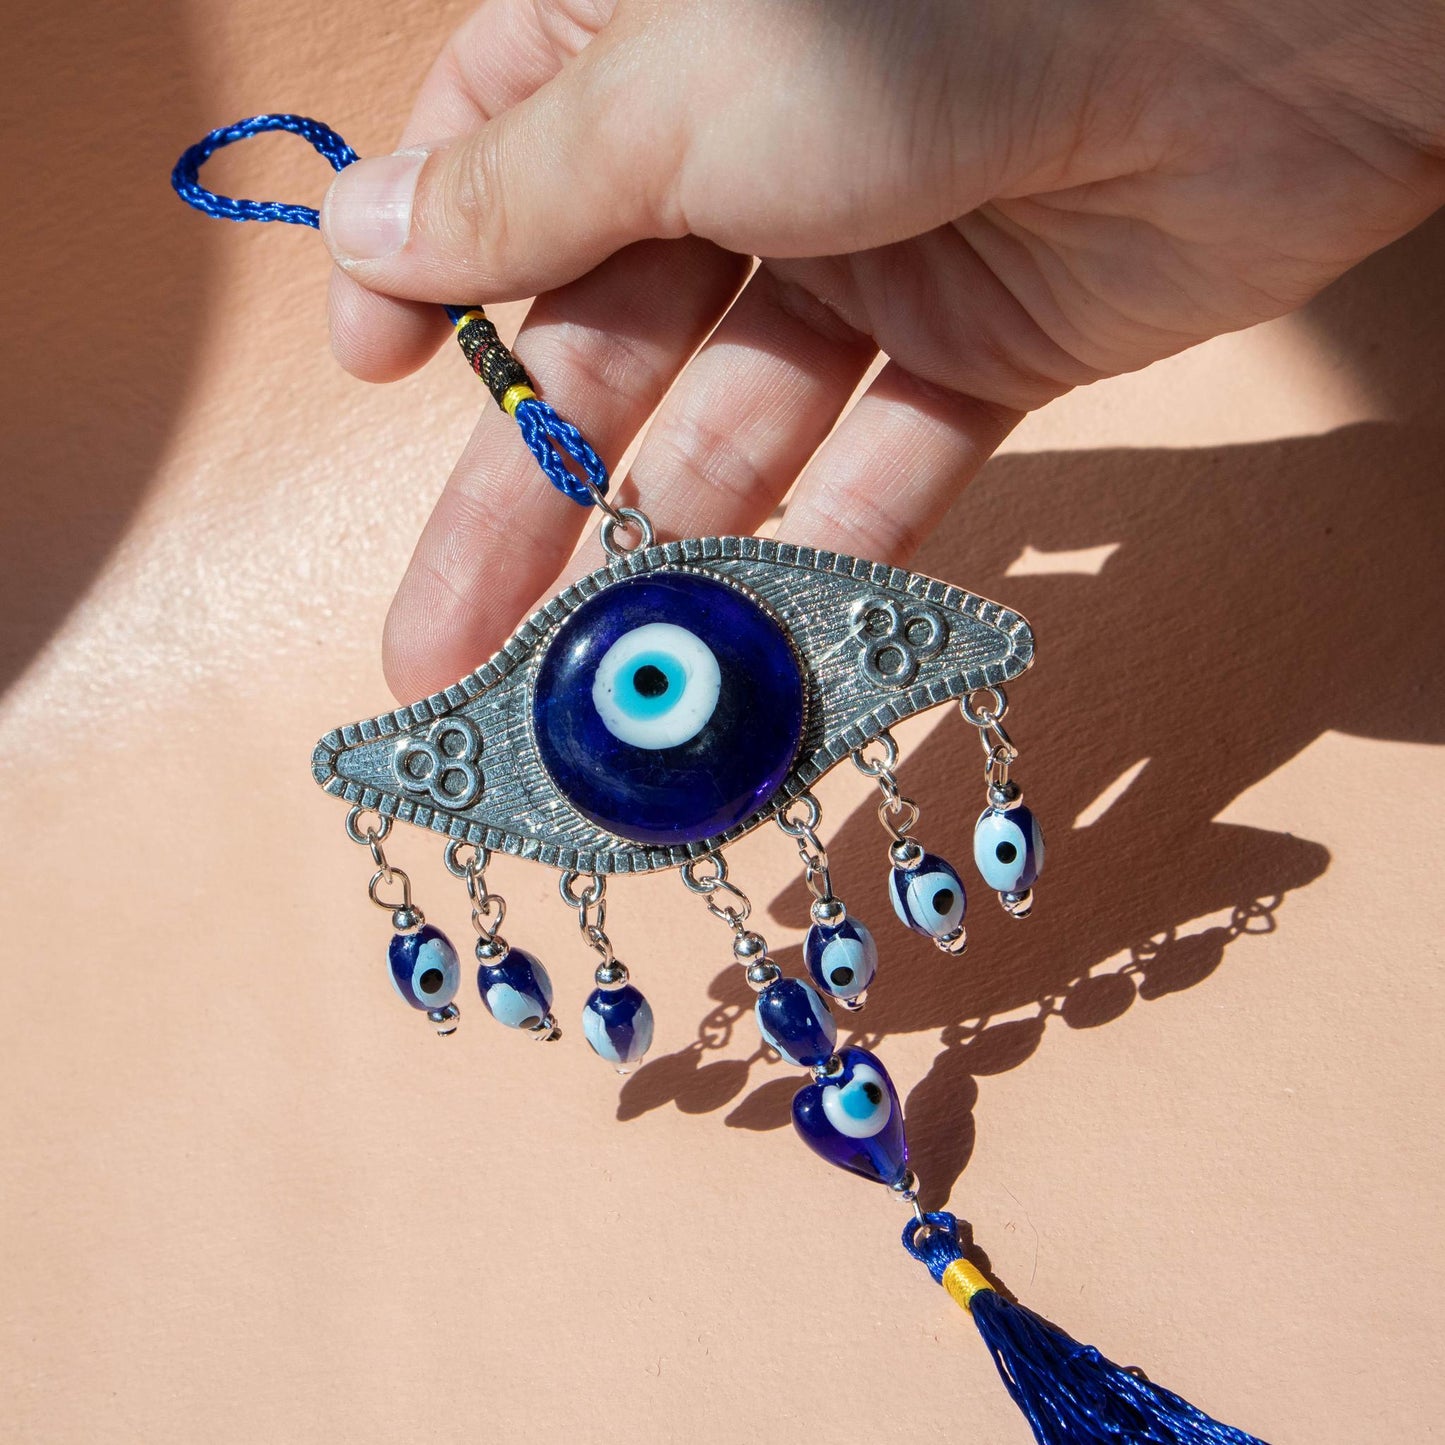 evil eye, evil eye hanging ornament, hanging evil eye, evil eye protection, evil eye accessory, evil eye tassle